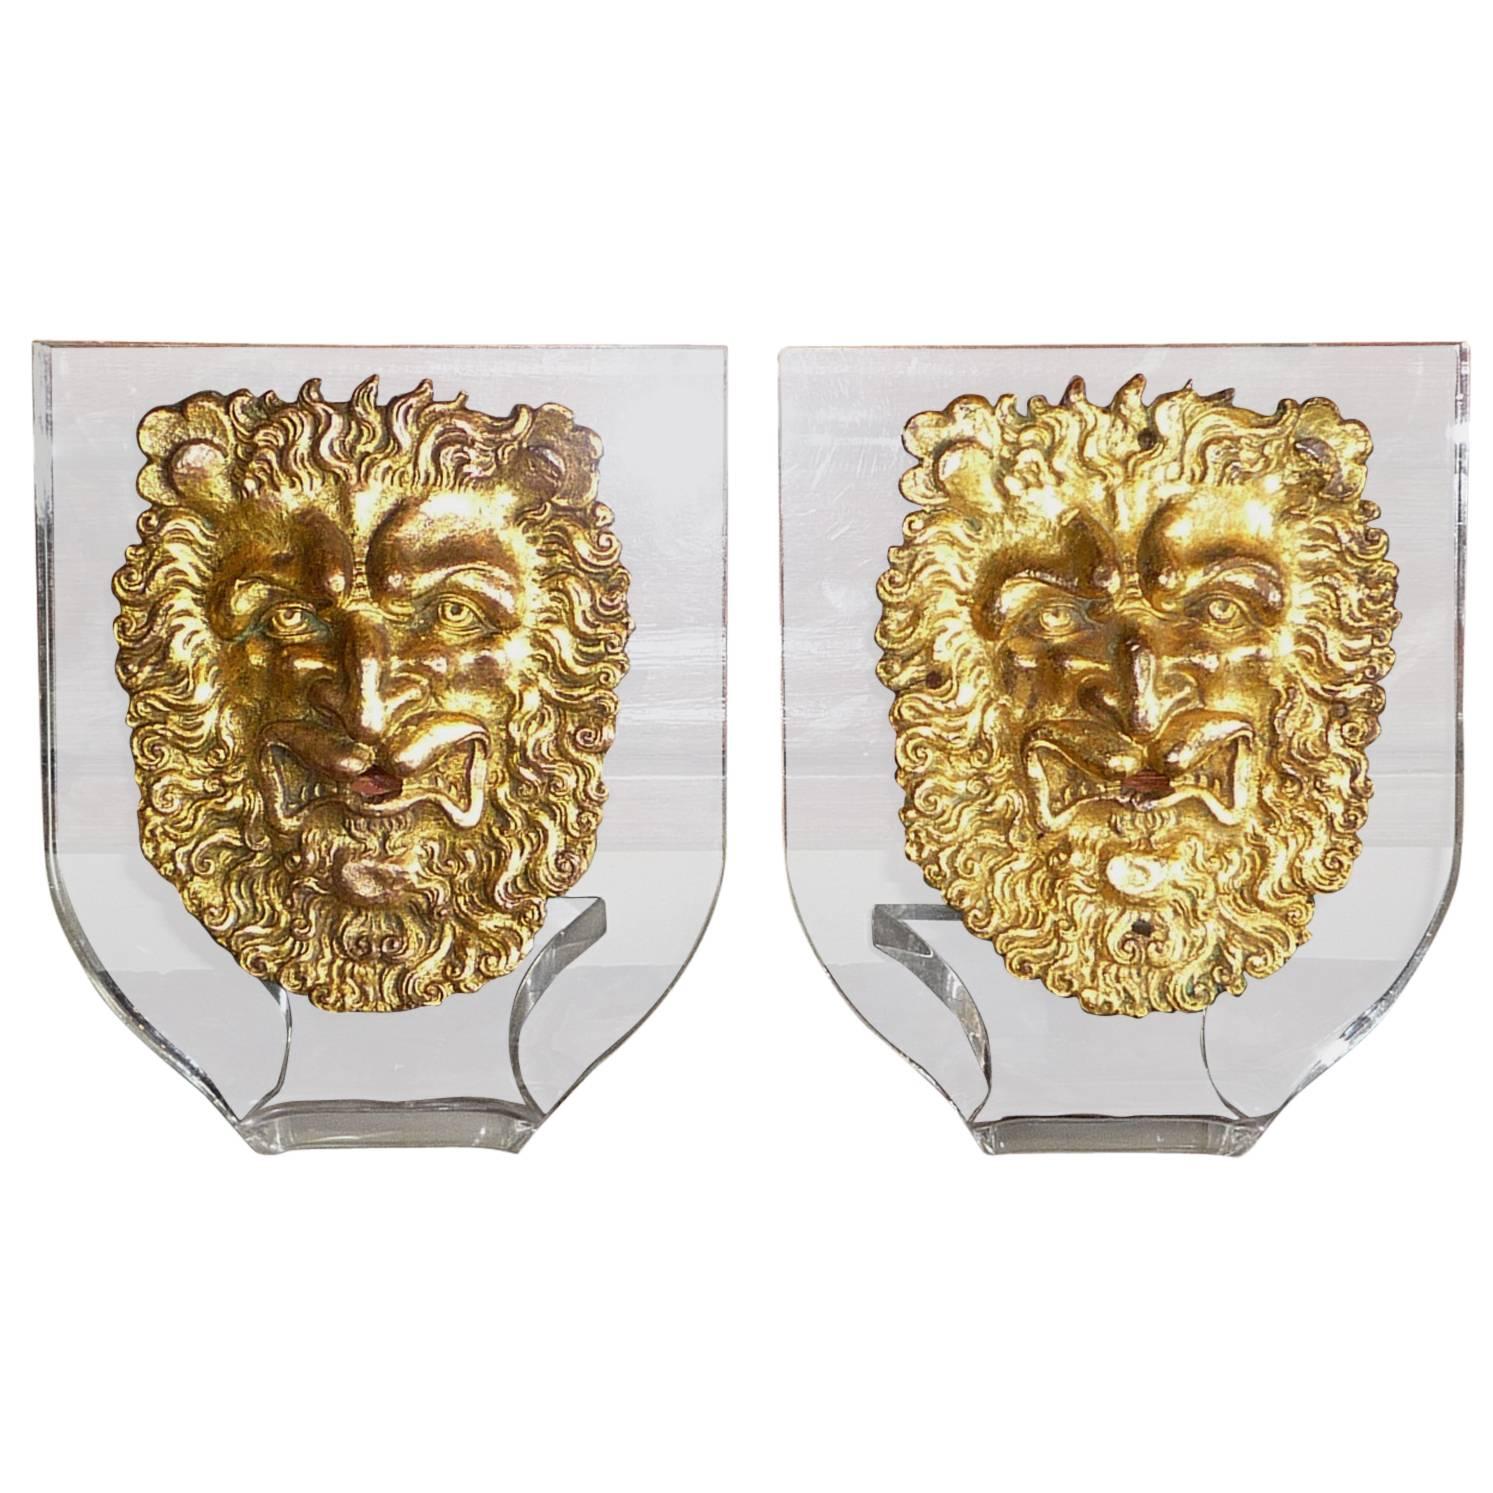 Pair of Roman Renaissance Period Gilt Bronze Masks of Lions, 16th Century